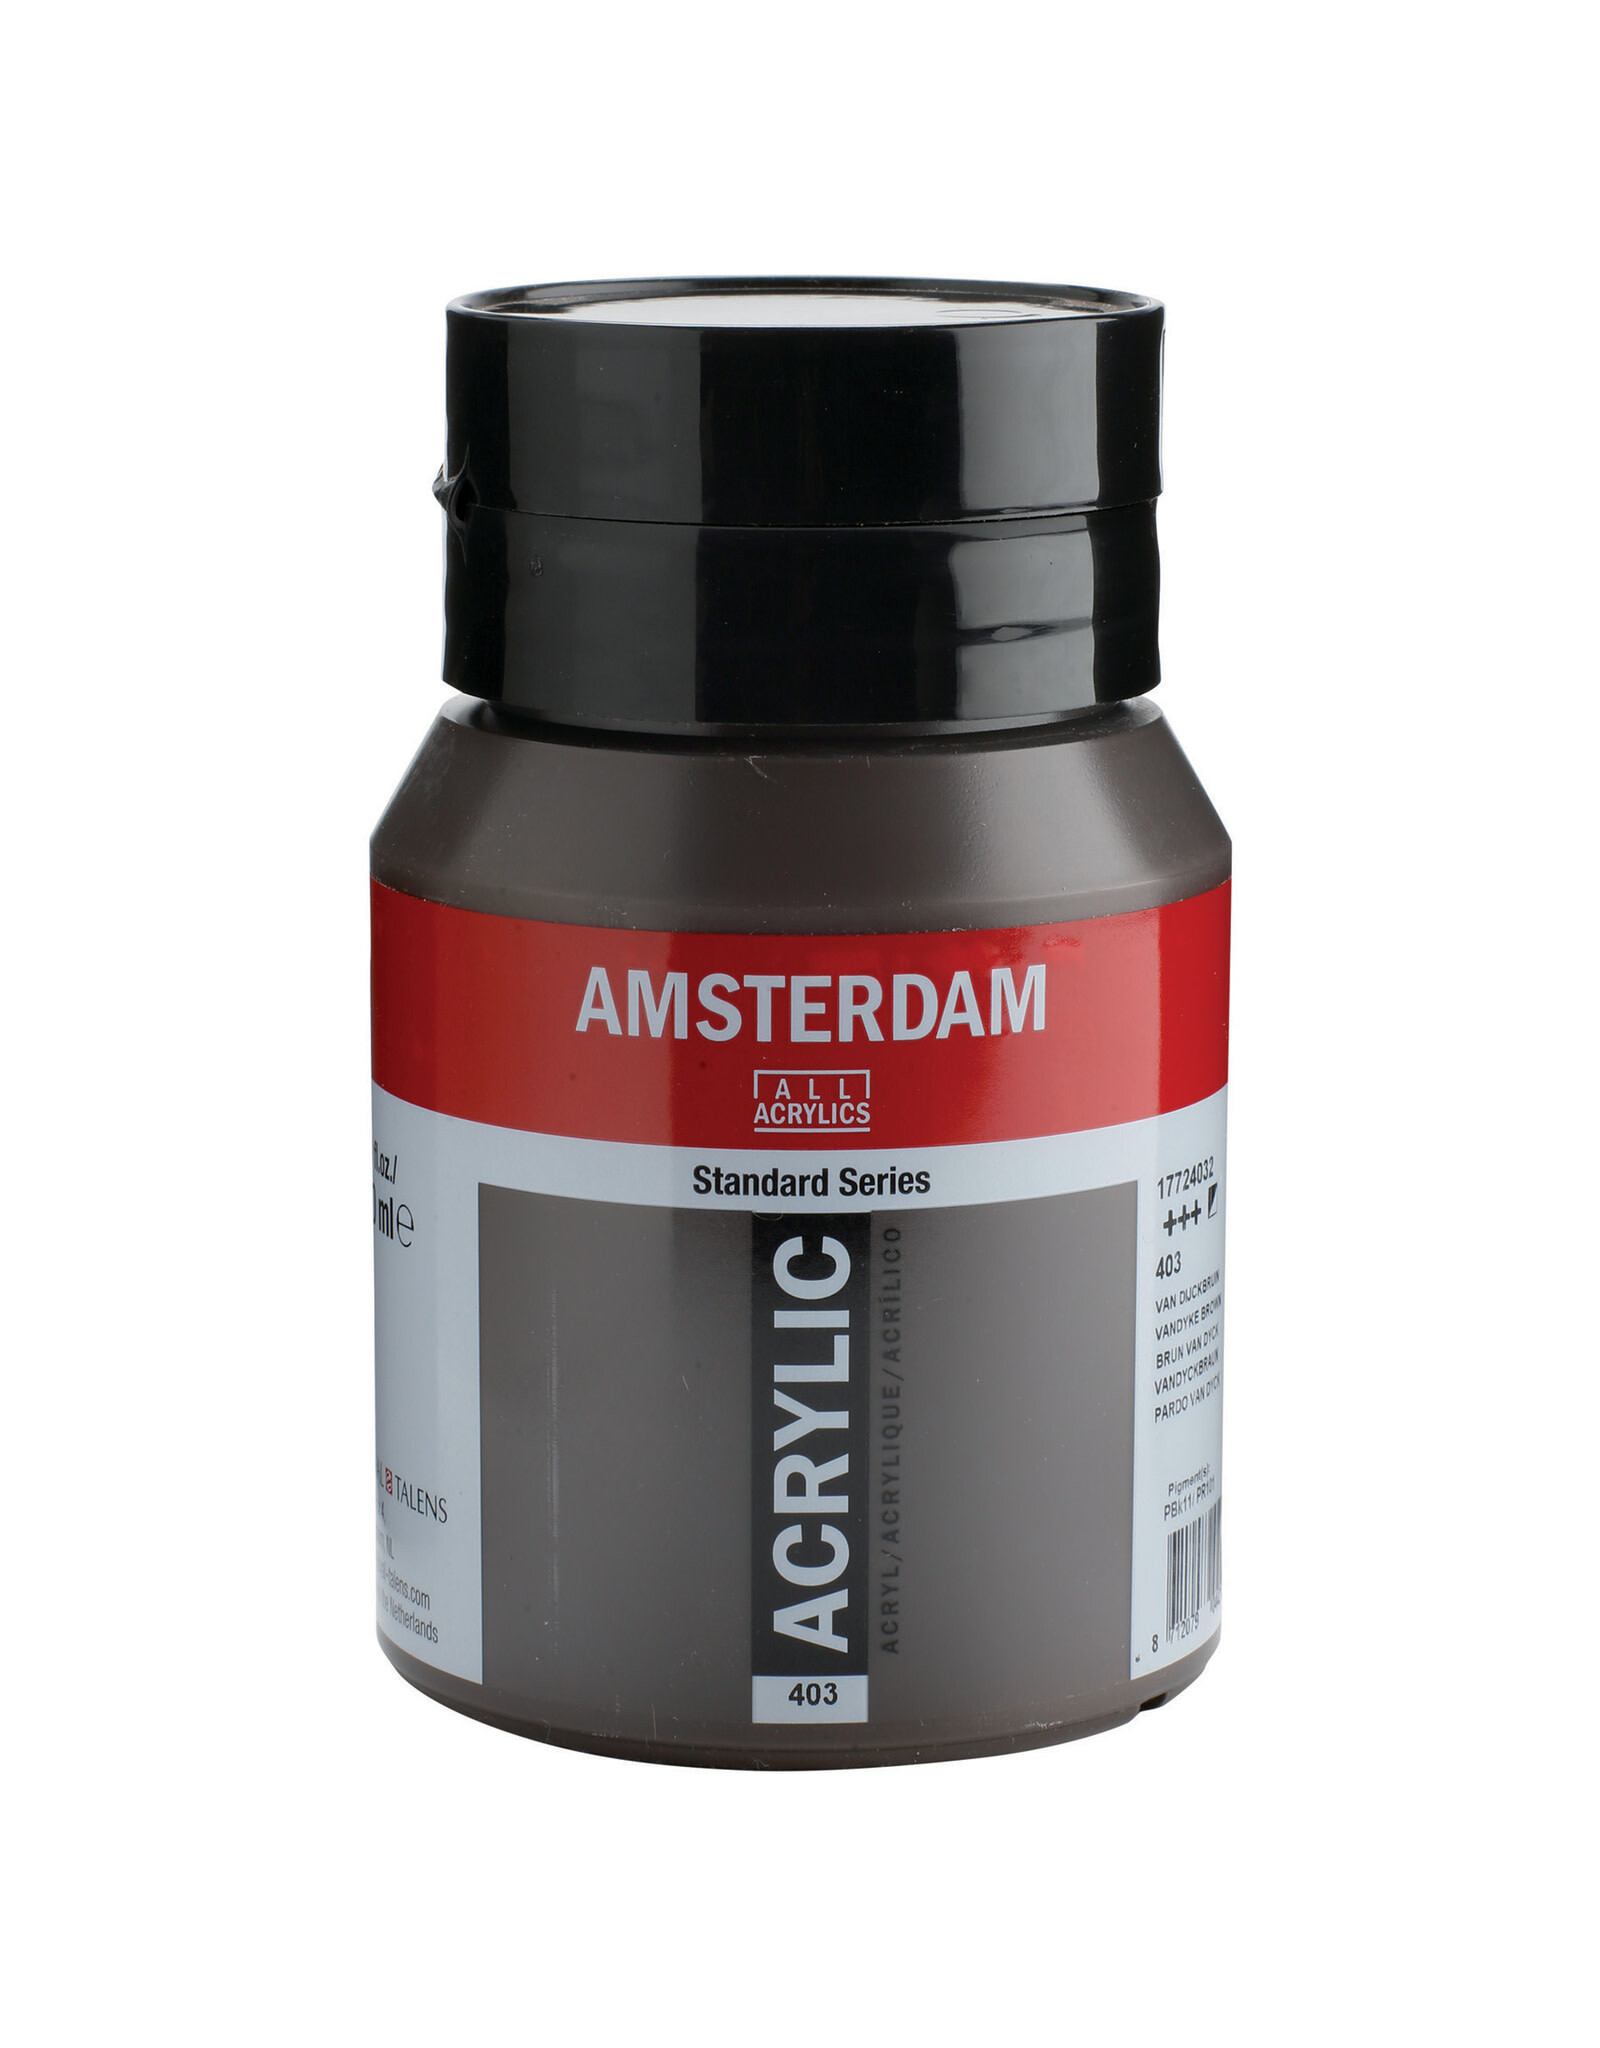 Royal Talens Amsterdam Standard Acrylic, Van Dyke Brown 500ml